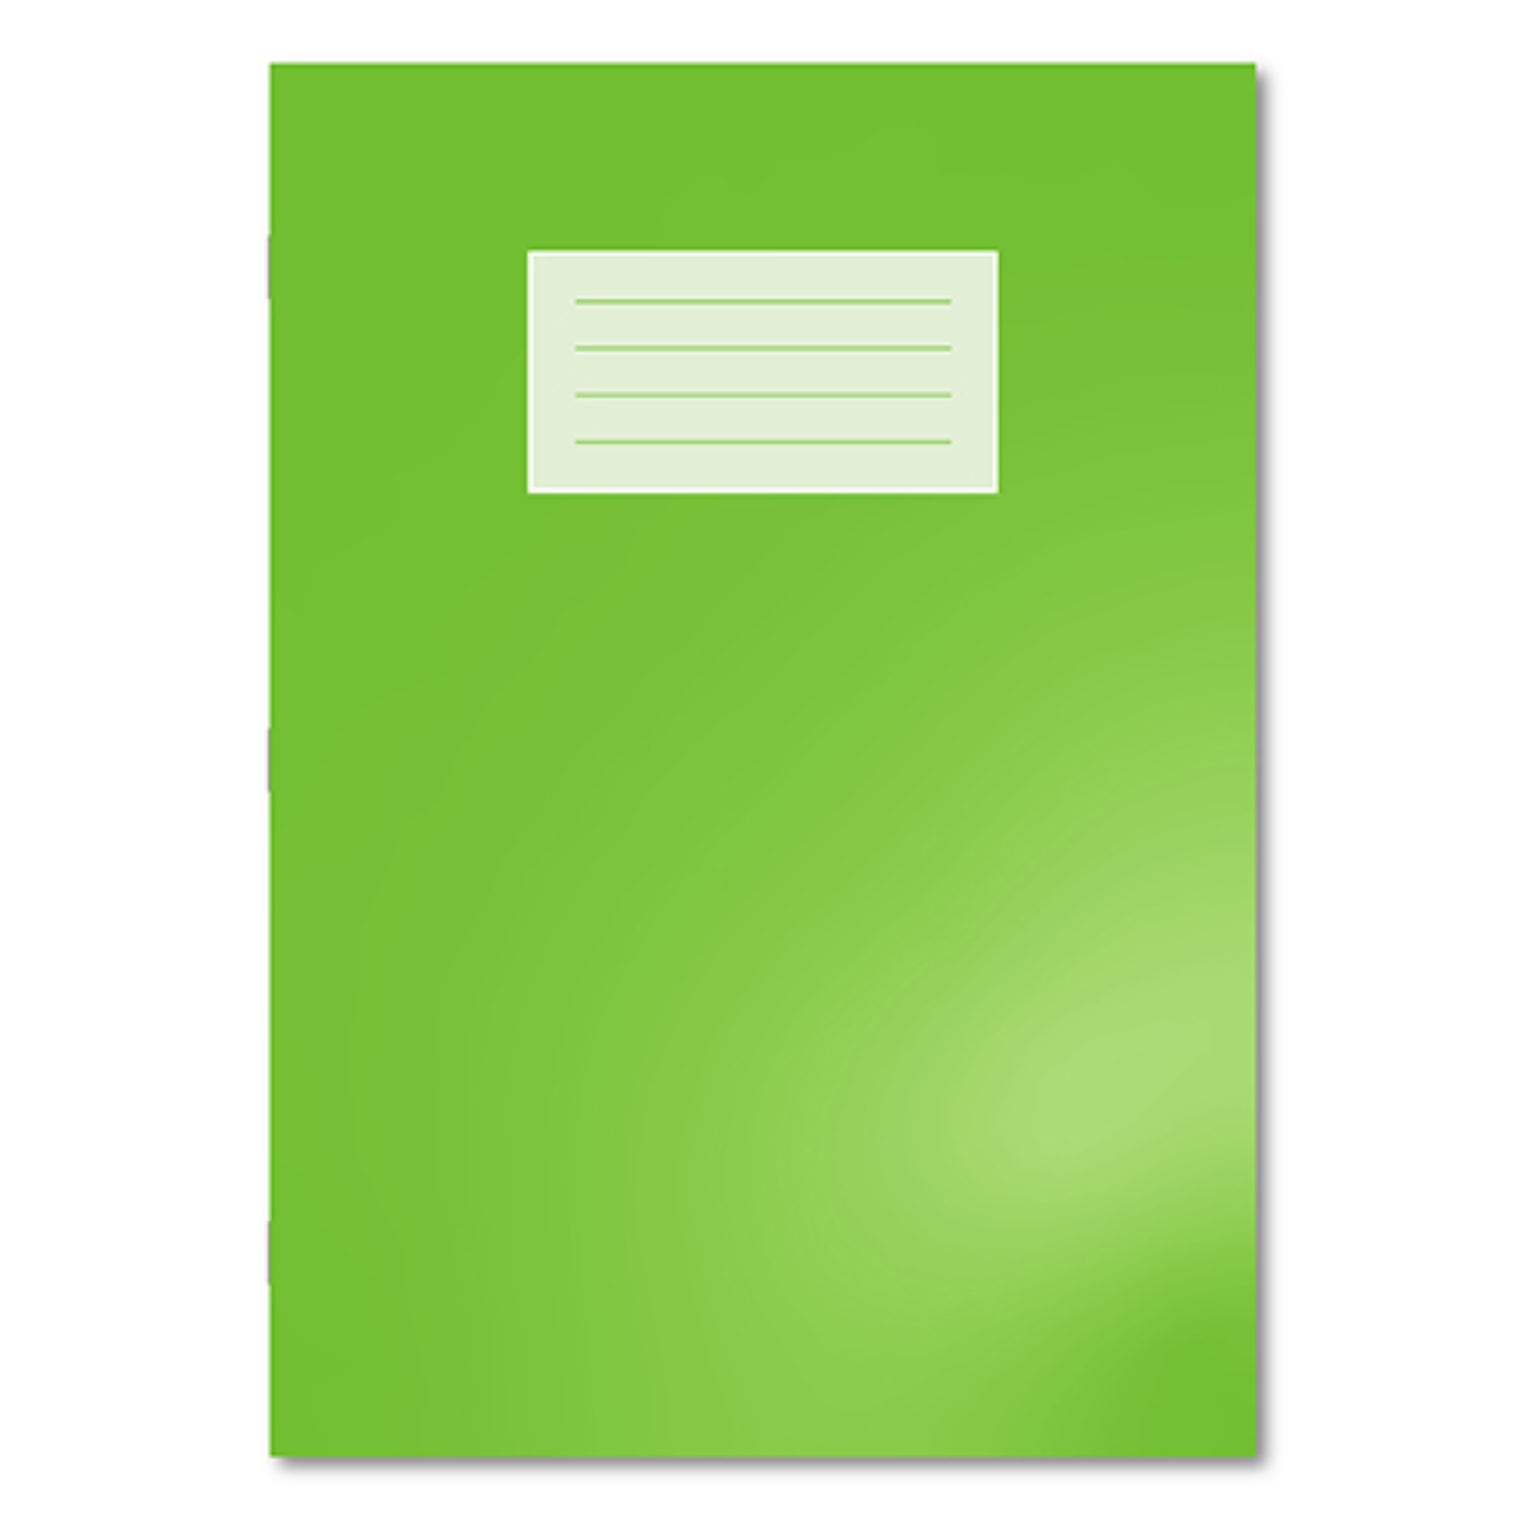 Oxford Exercise Book Light Green